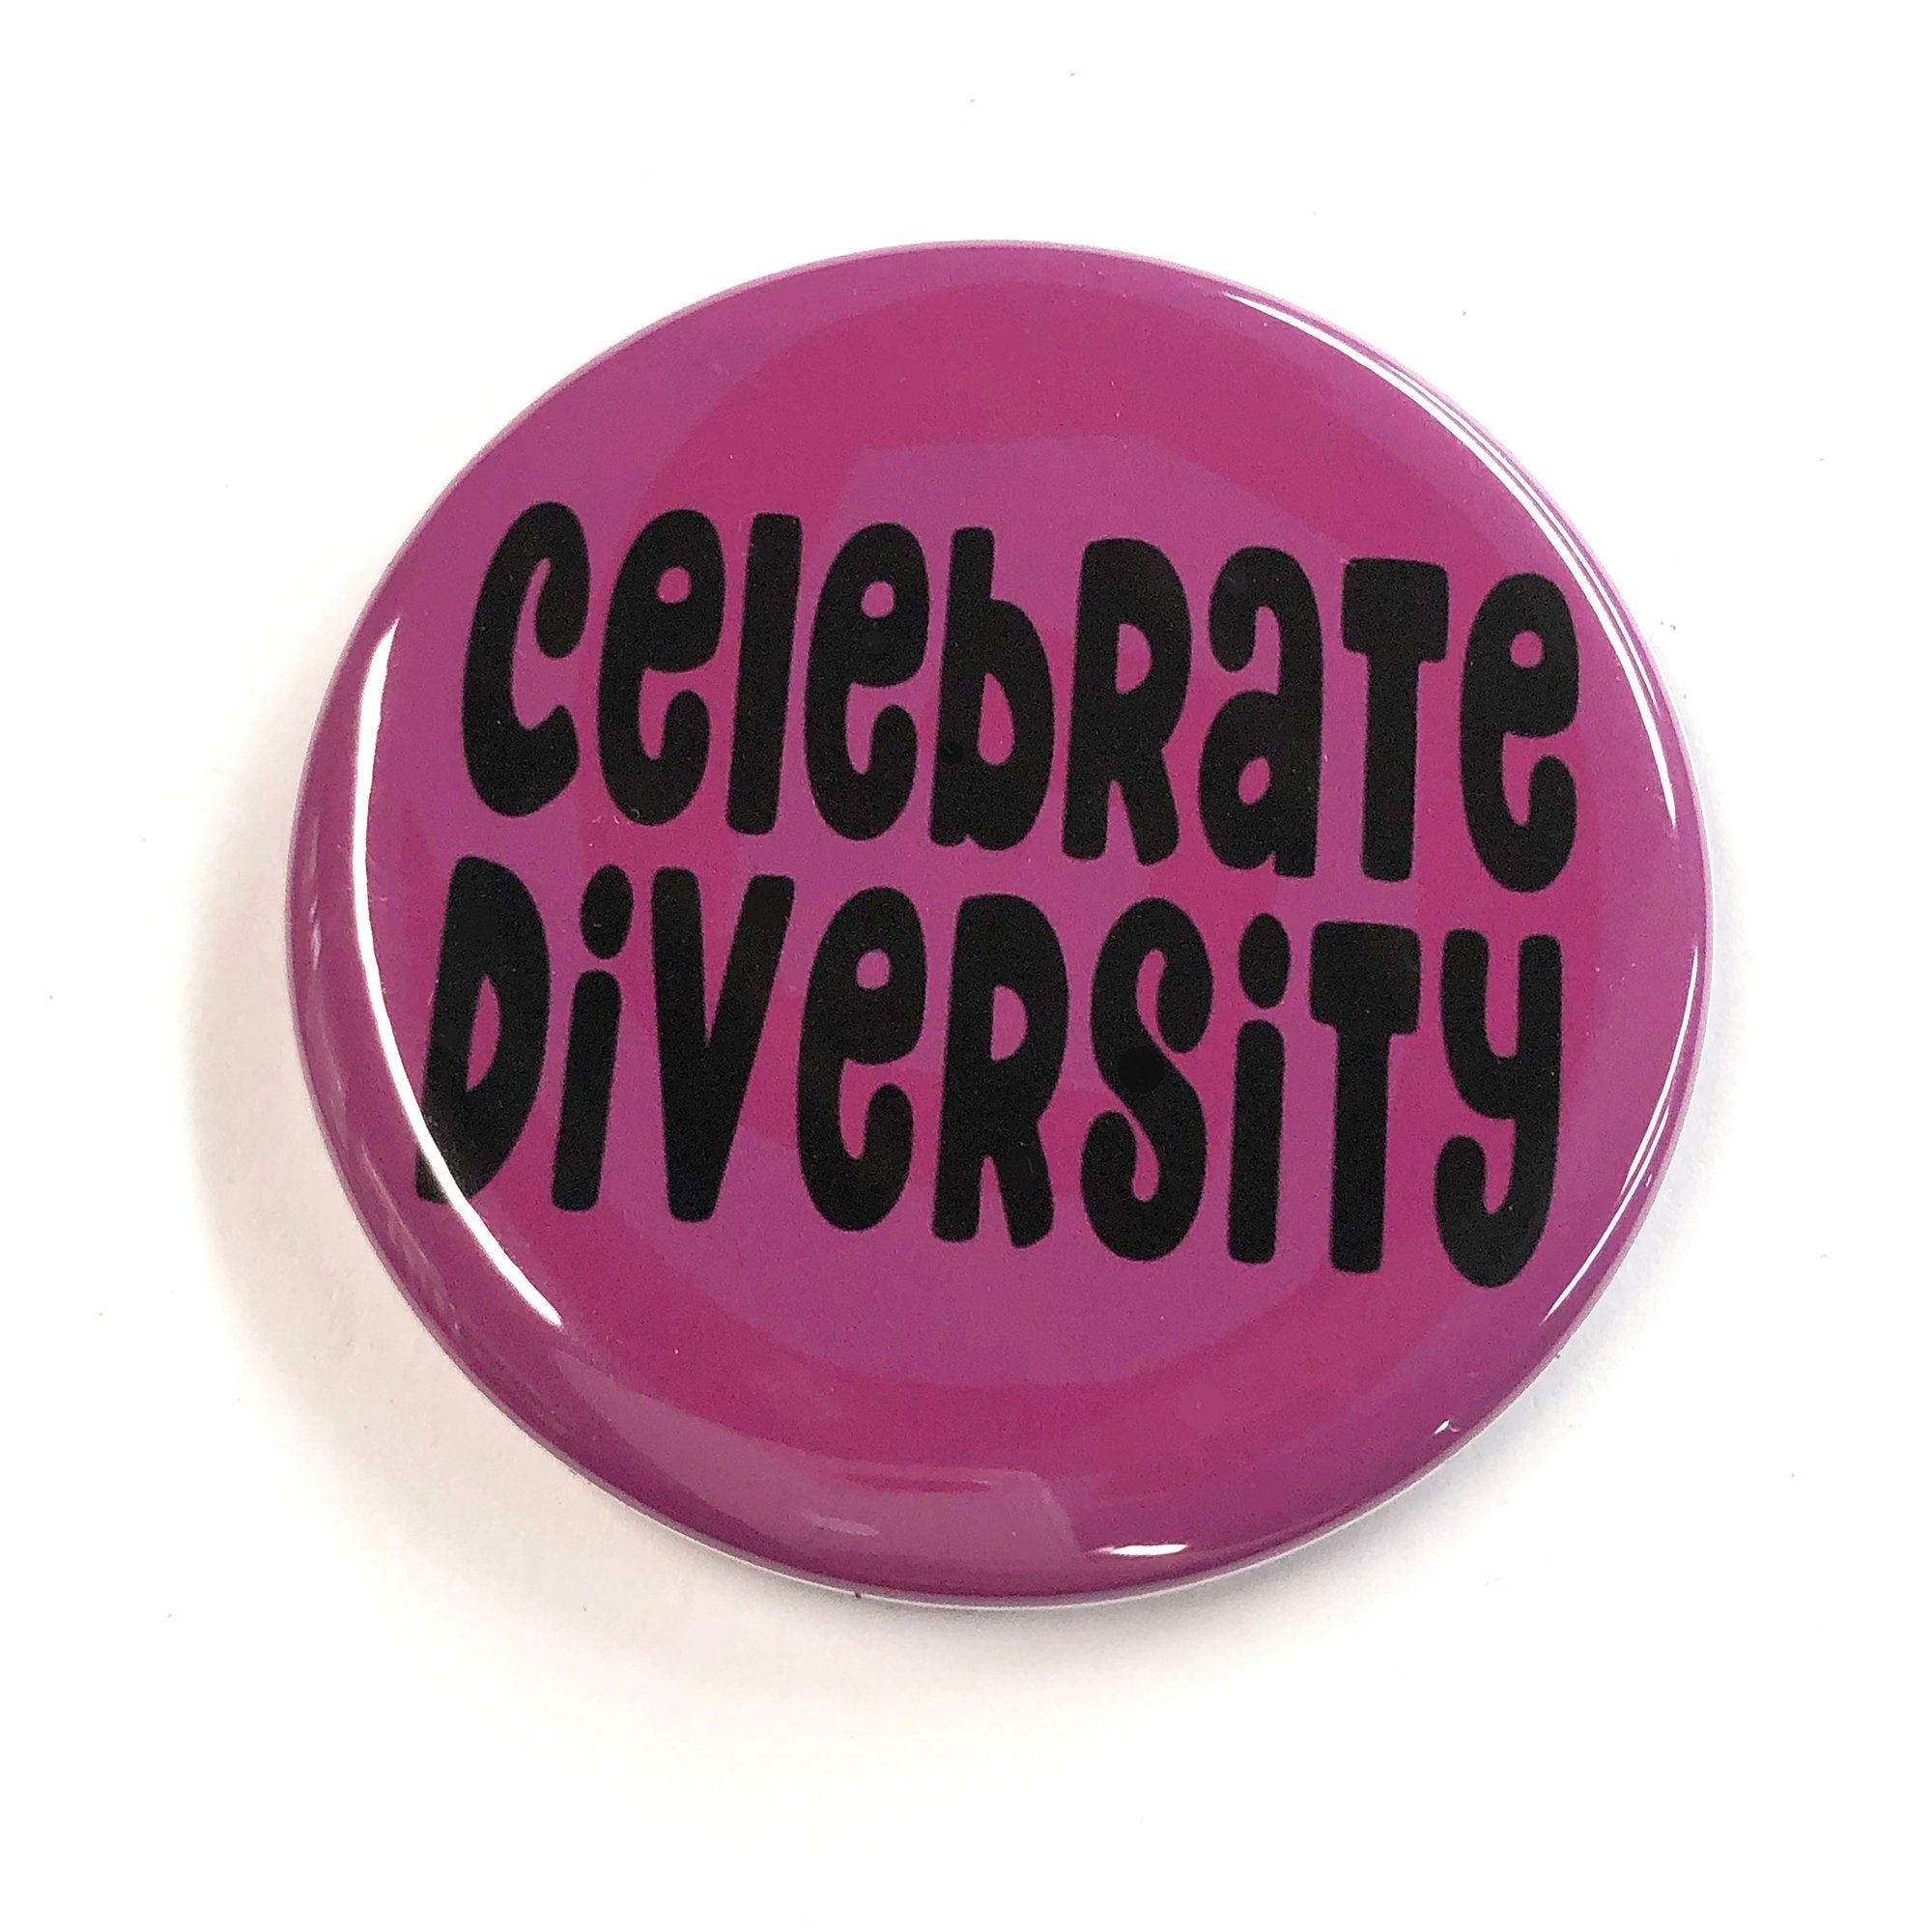 Celebrate Diversity Button, Magnet, or Mirror